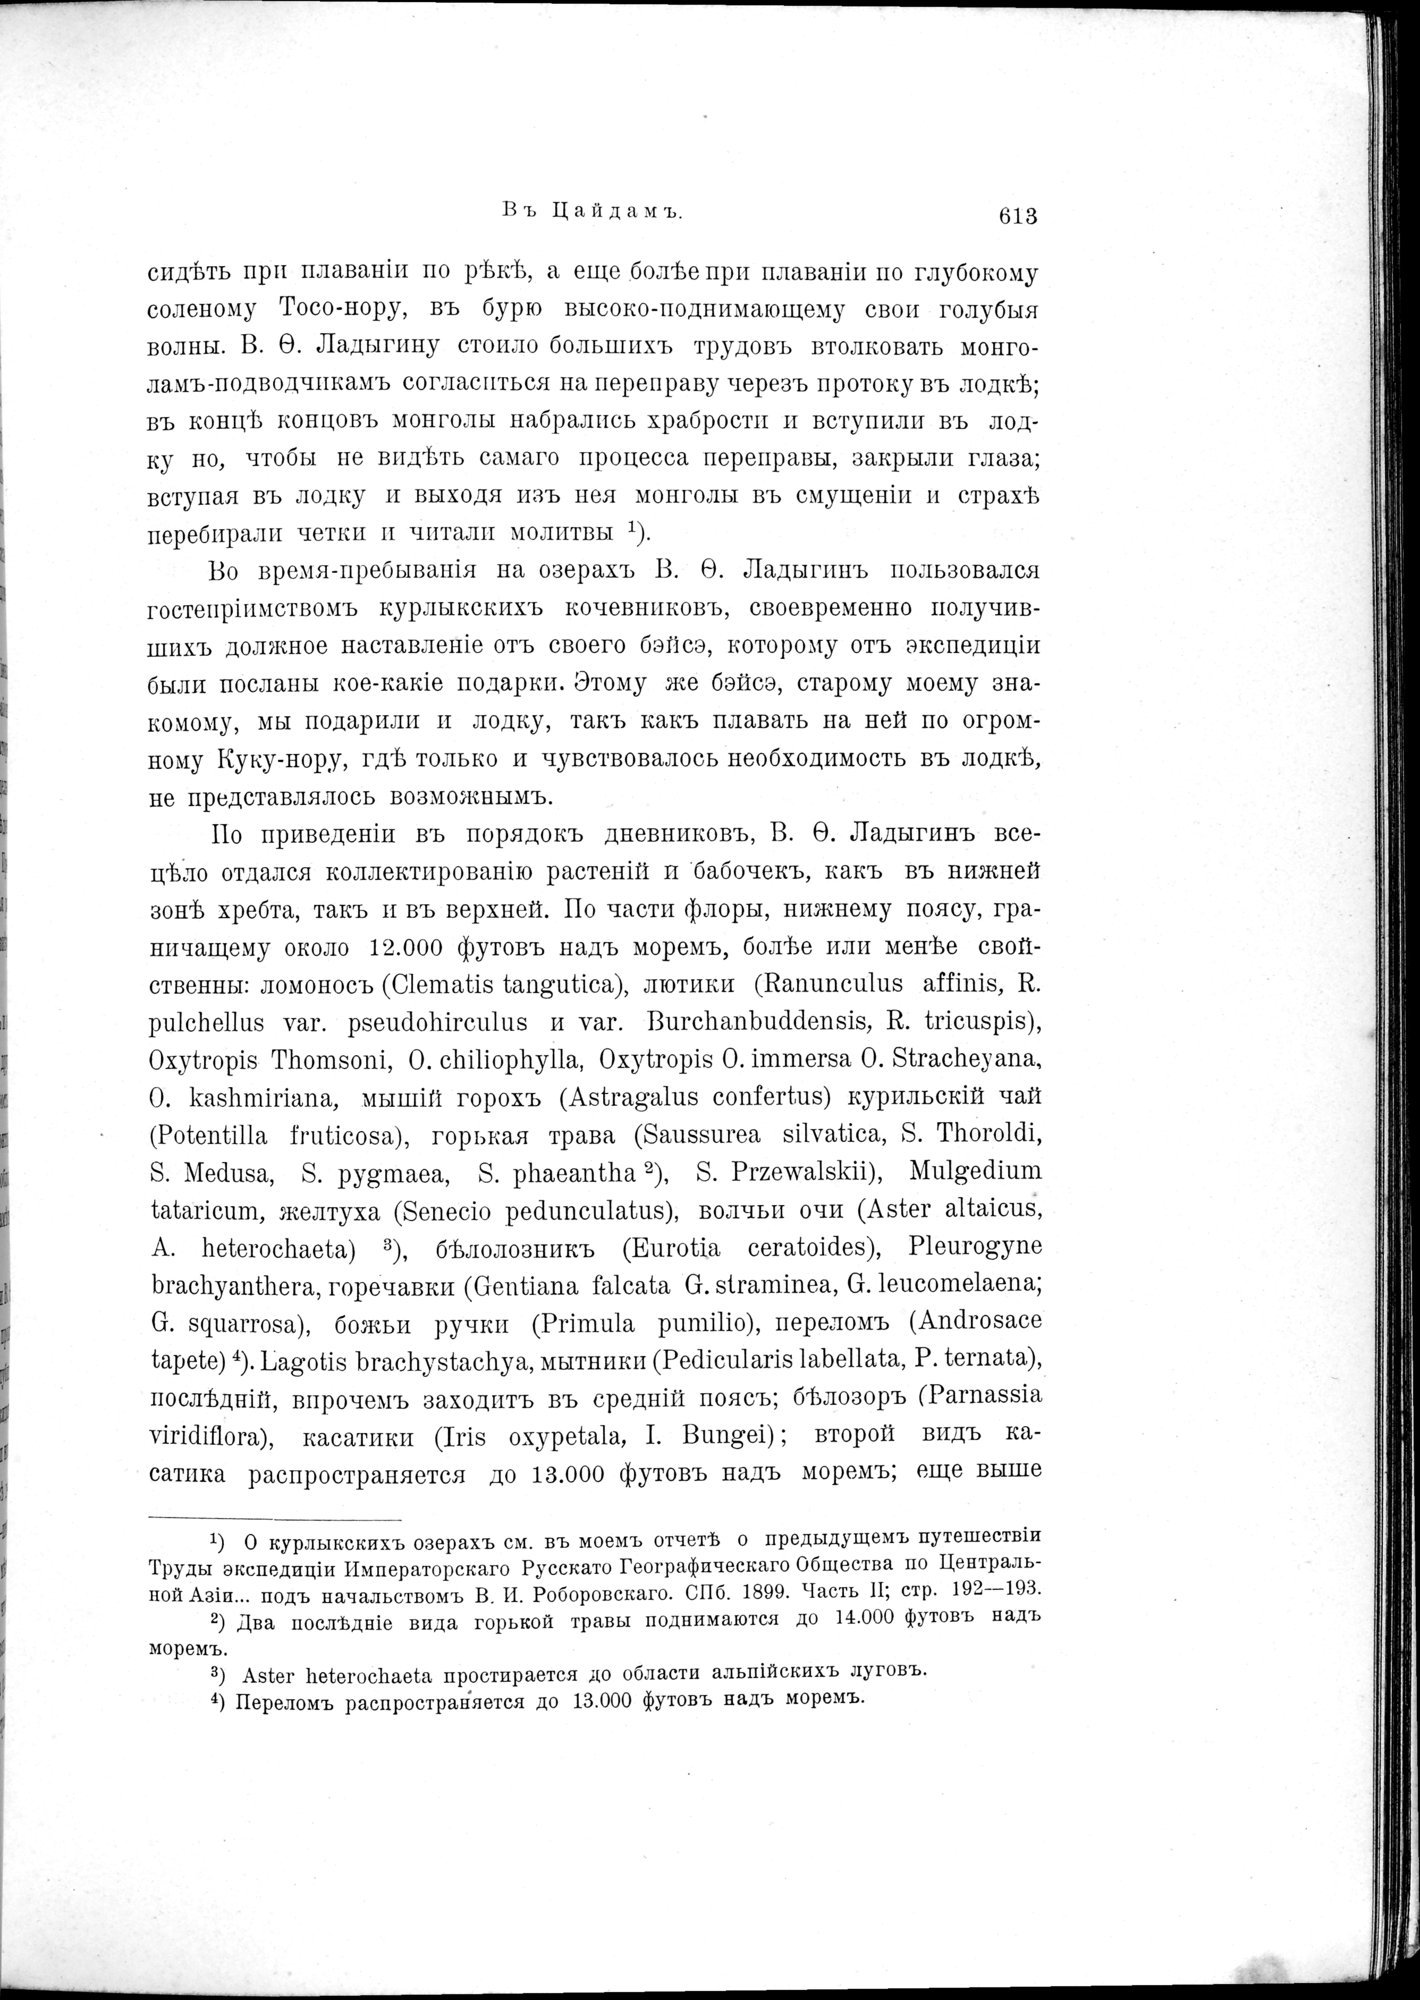 Mongoliia i Kam : vol.2 / Page 441 (Grayscale High Resolution Image)